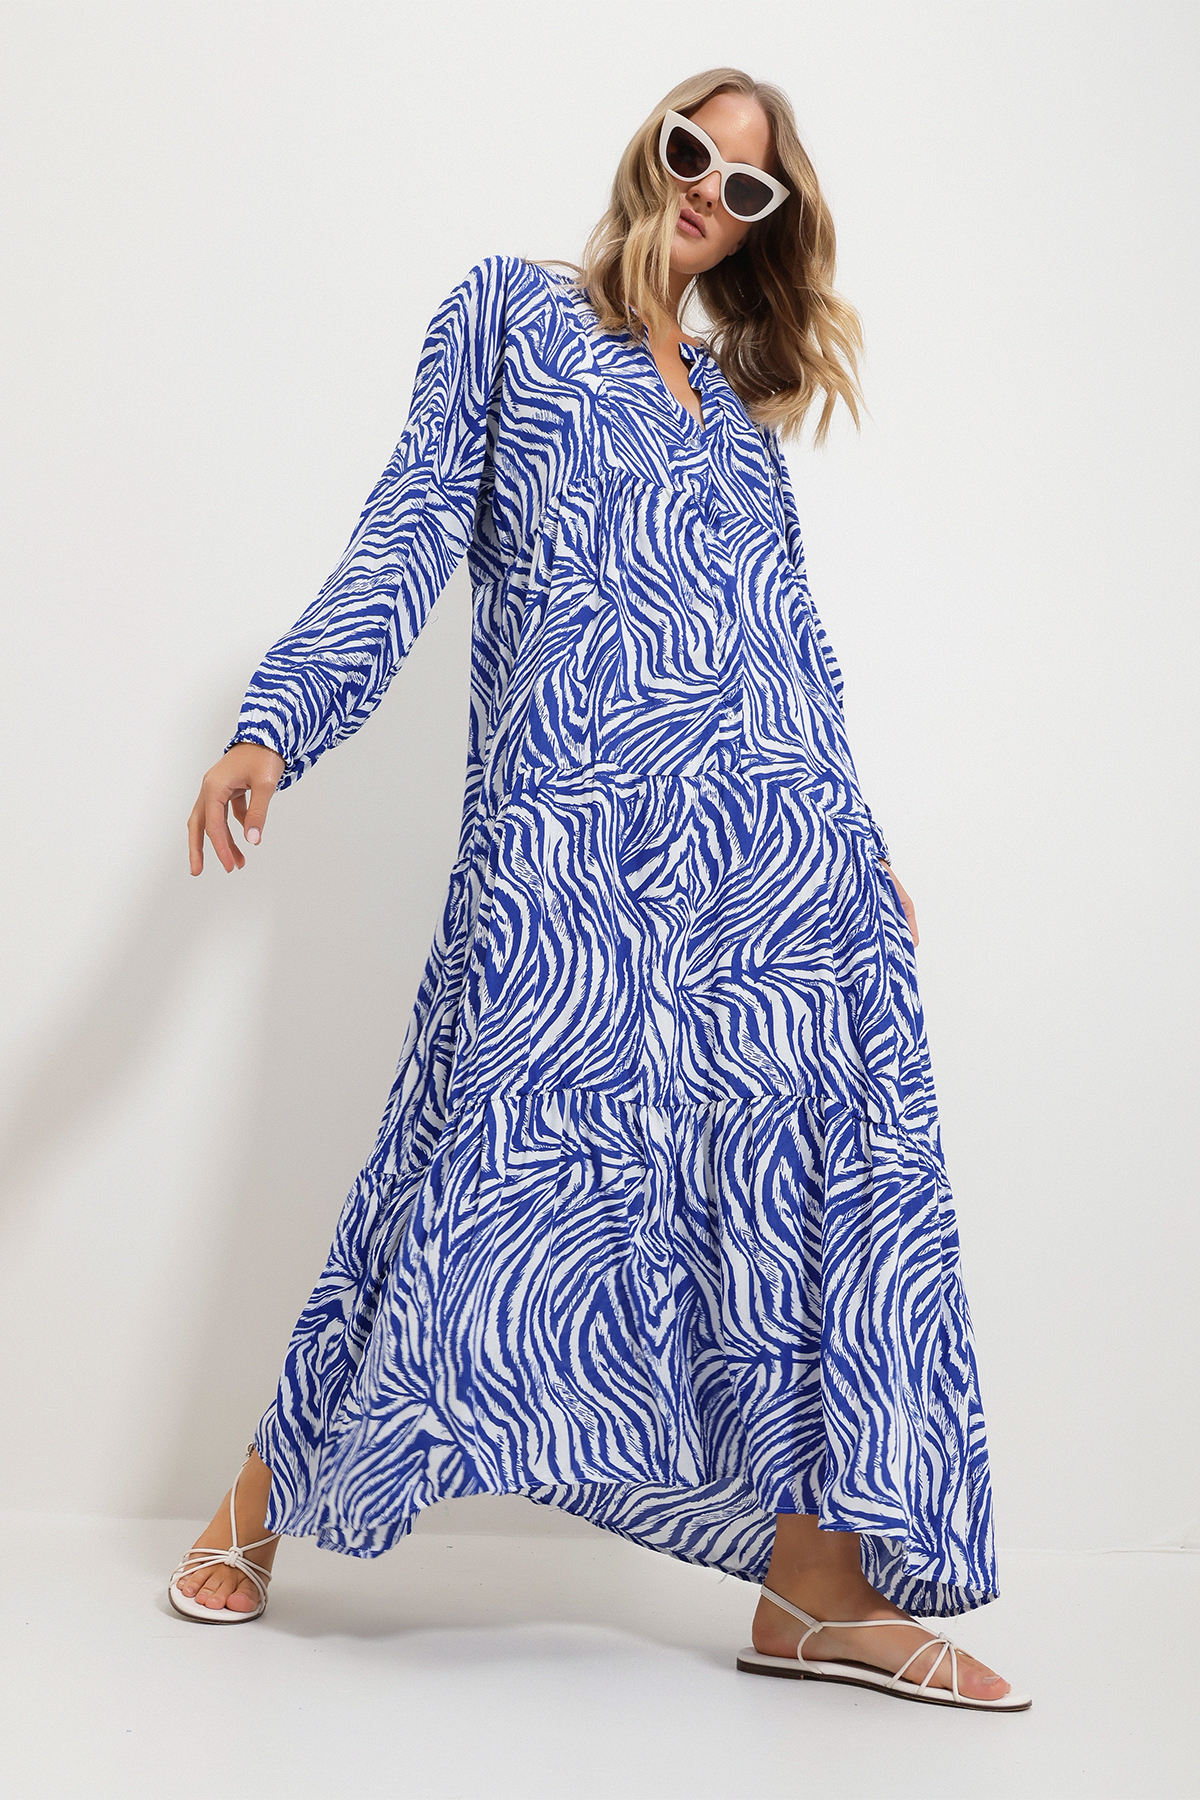 Levně Trend Alaçatı Stili Women's Saxe Blue Large Collar Shawl Patterned Maxi Length Dress